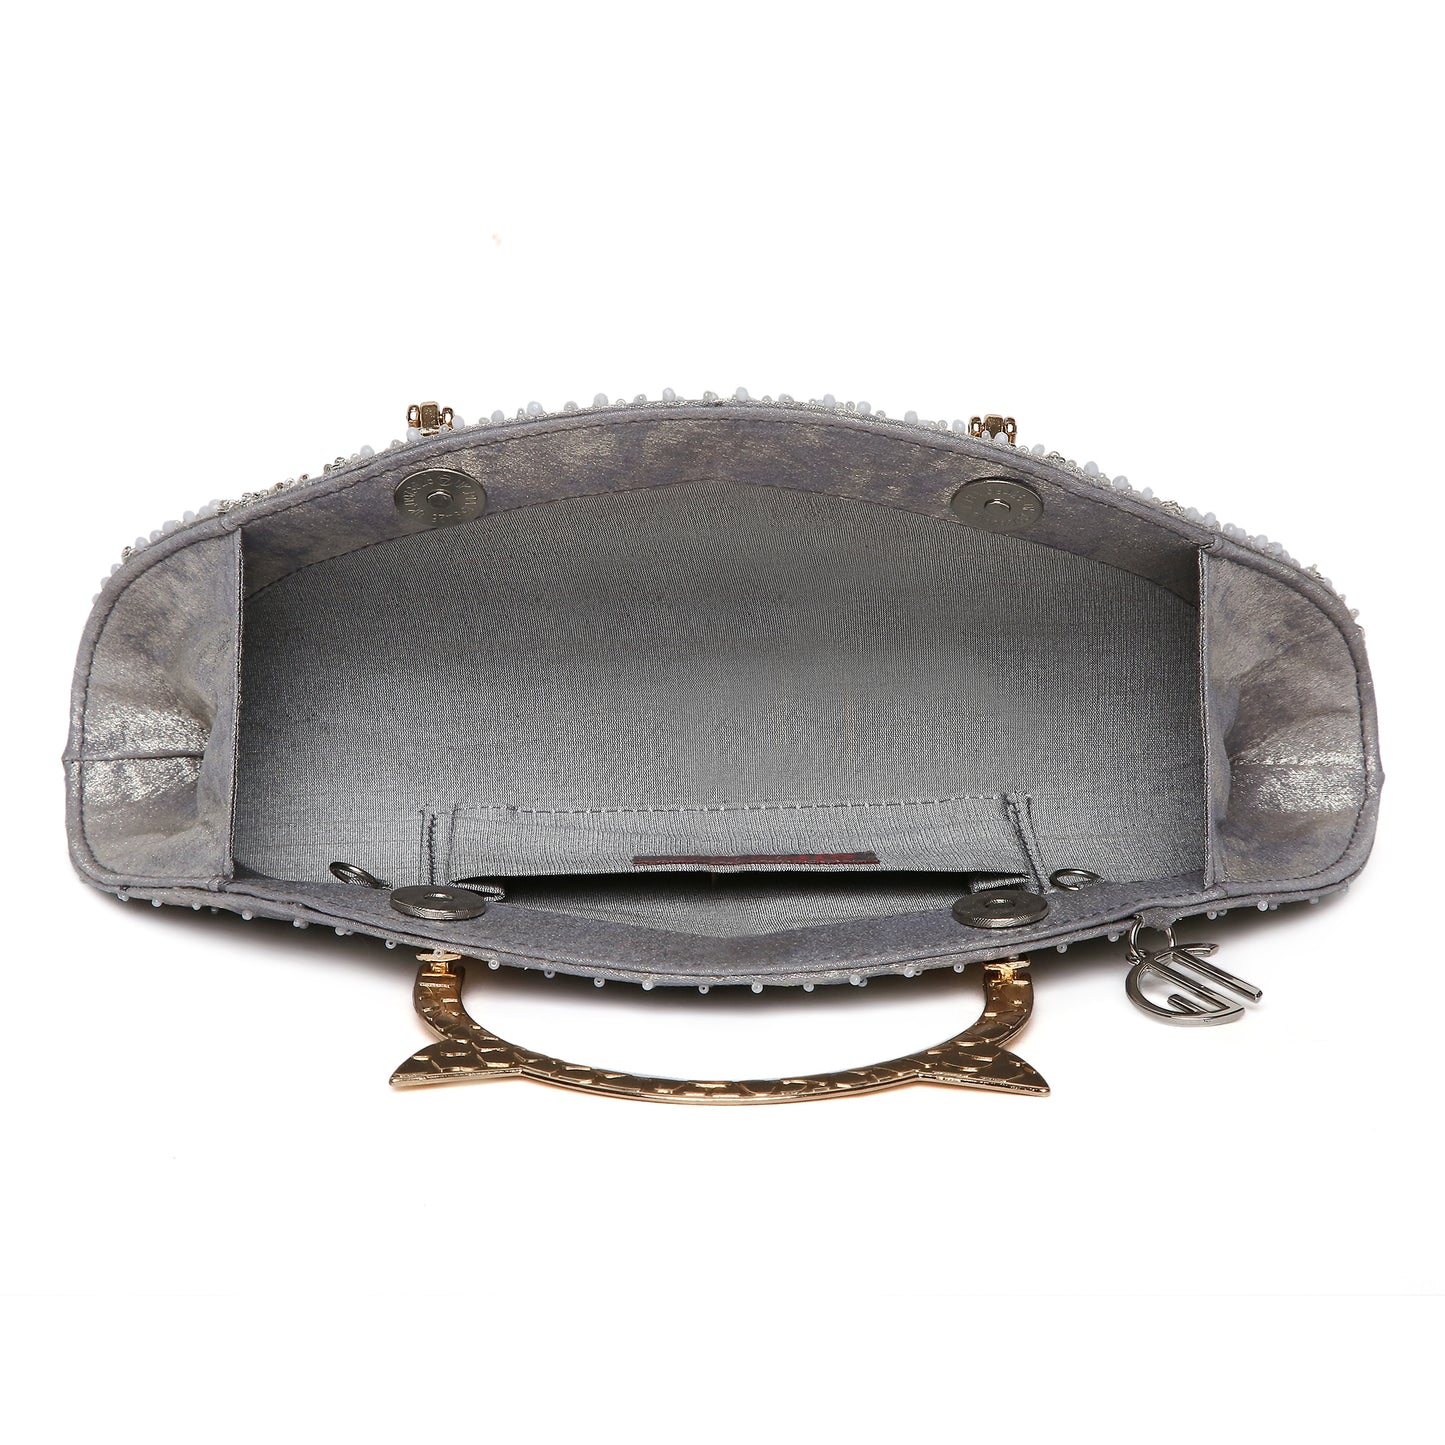 Thea Silver Halfmoon handbag